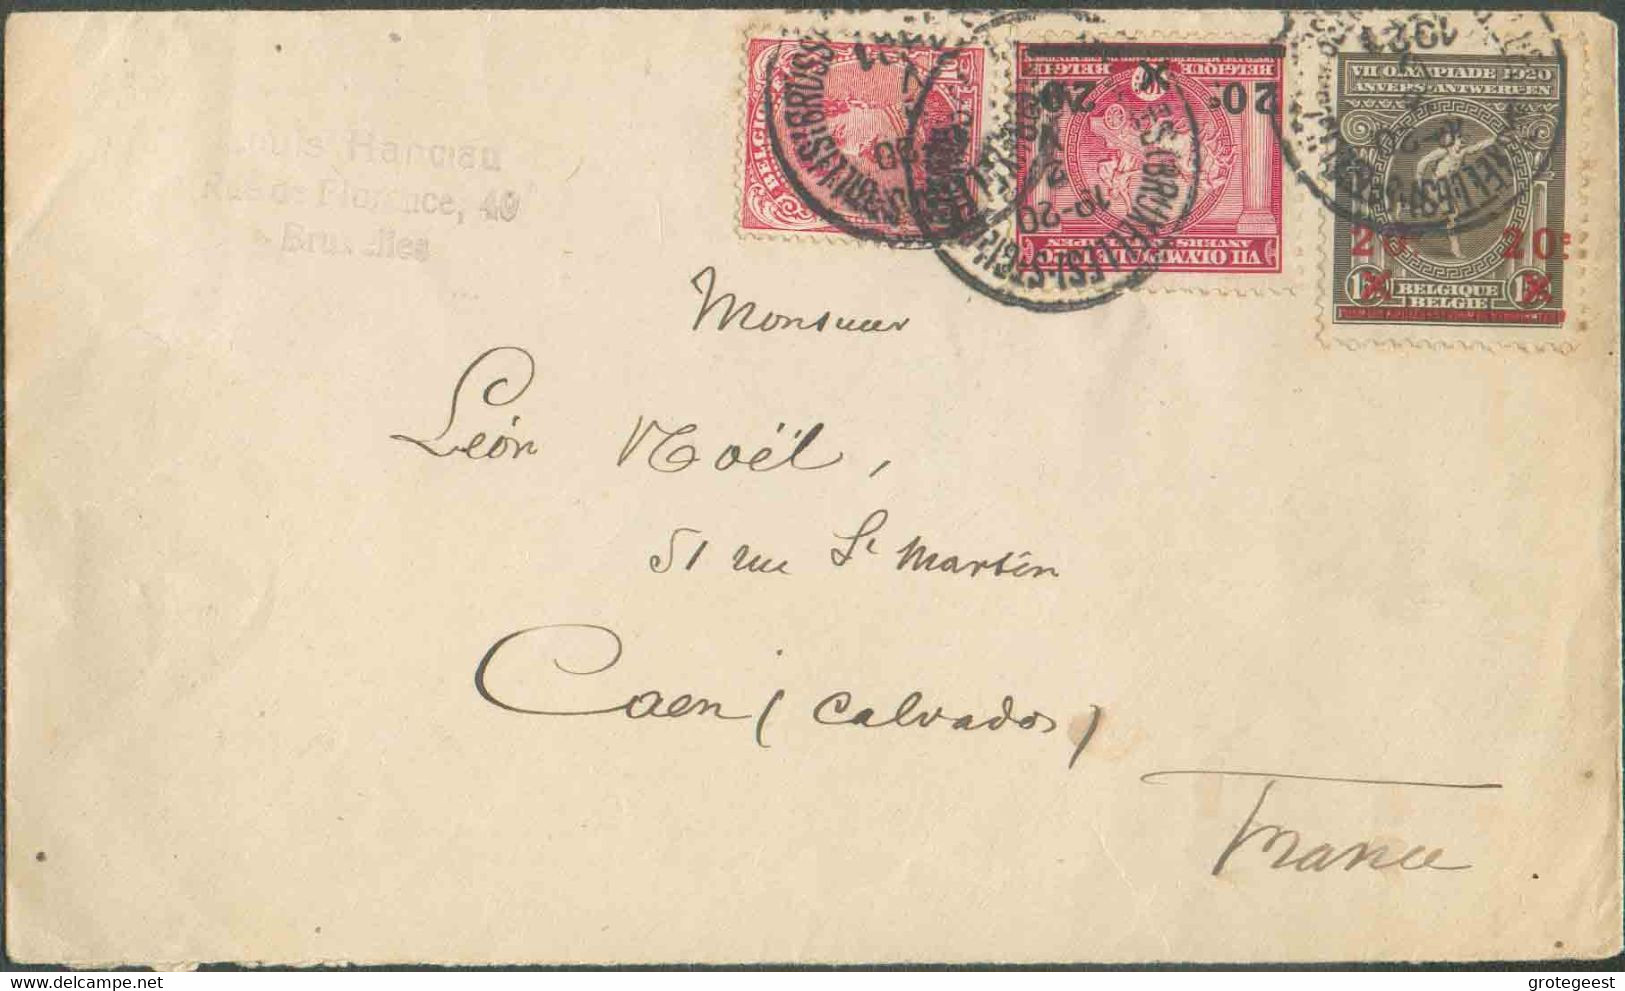 BELGIUM N°138-185/6 - Affr. Combiné à 50 Centimes Obl. Sc St-GILLES (BRUXELLES) s/L. Du 2-V-1921 Vers Caen. - TB - 17309 - Verano 1920: Amberes (Anvers)